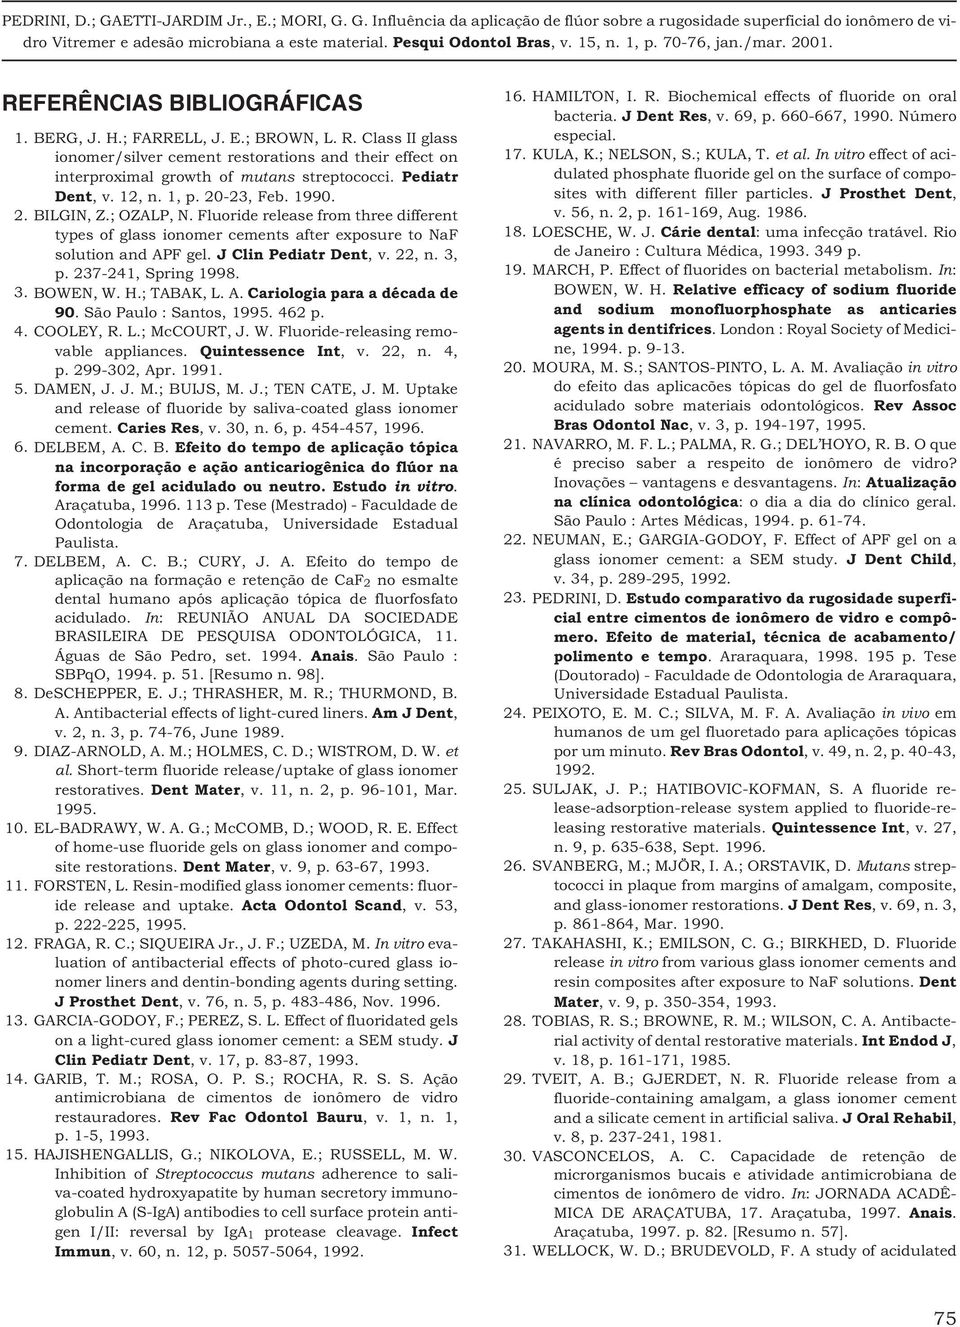 J Clin Pediatr Dent, v. 22, n. 3, p. 237-241, Spring 1998. 3. BOWEN, W. H.; TABAK, L. A. Cariologia para a década de 90. São Paulo : Santos, 1995. 462 p. 4. COOLEY, R. L.; McCOURT, J. W. Fluoride-releasing removable appliances.